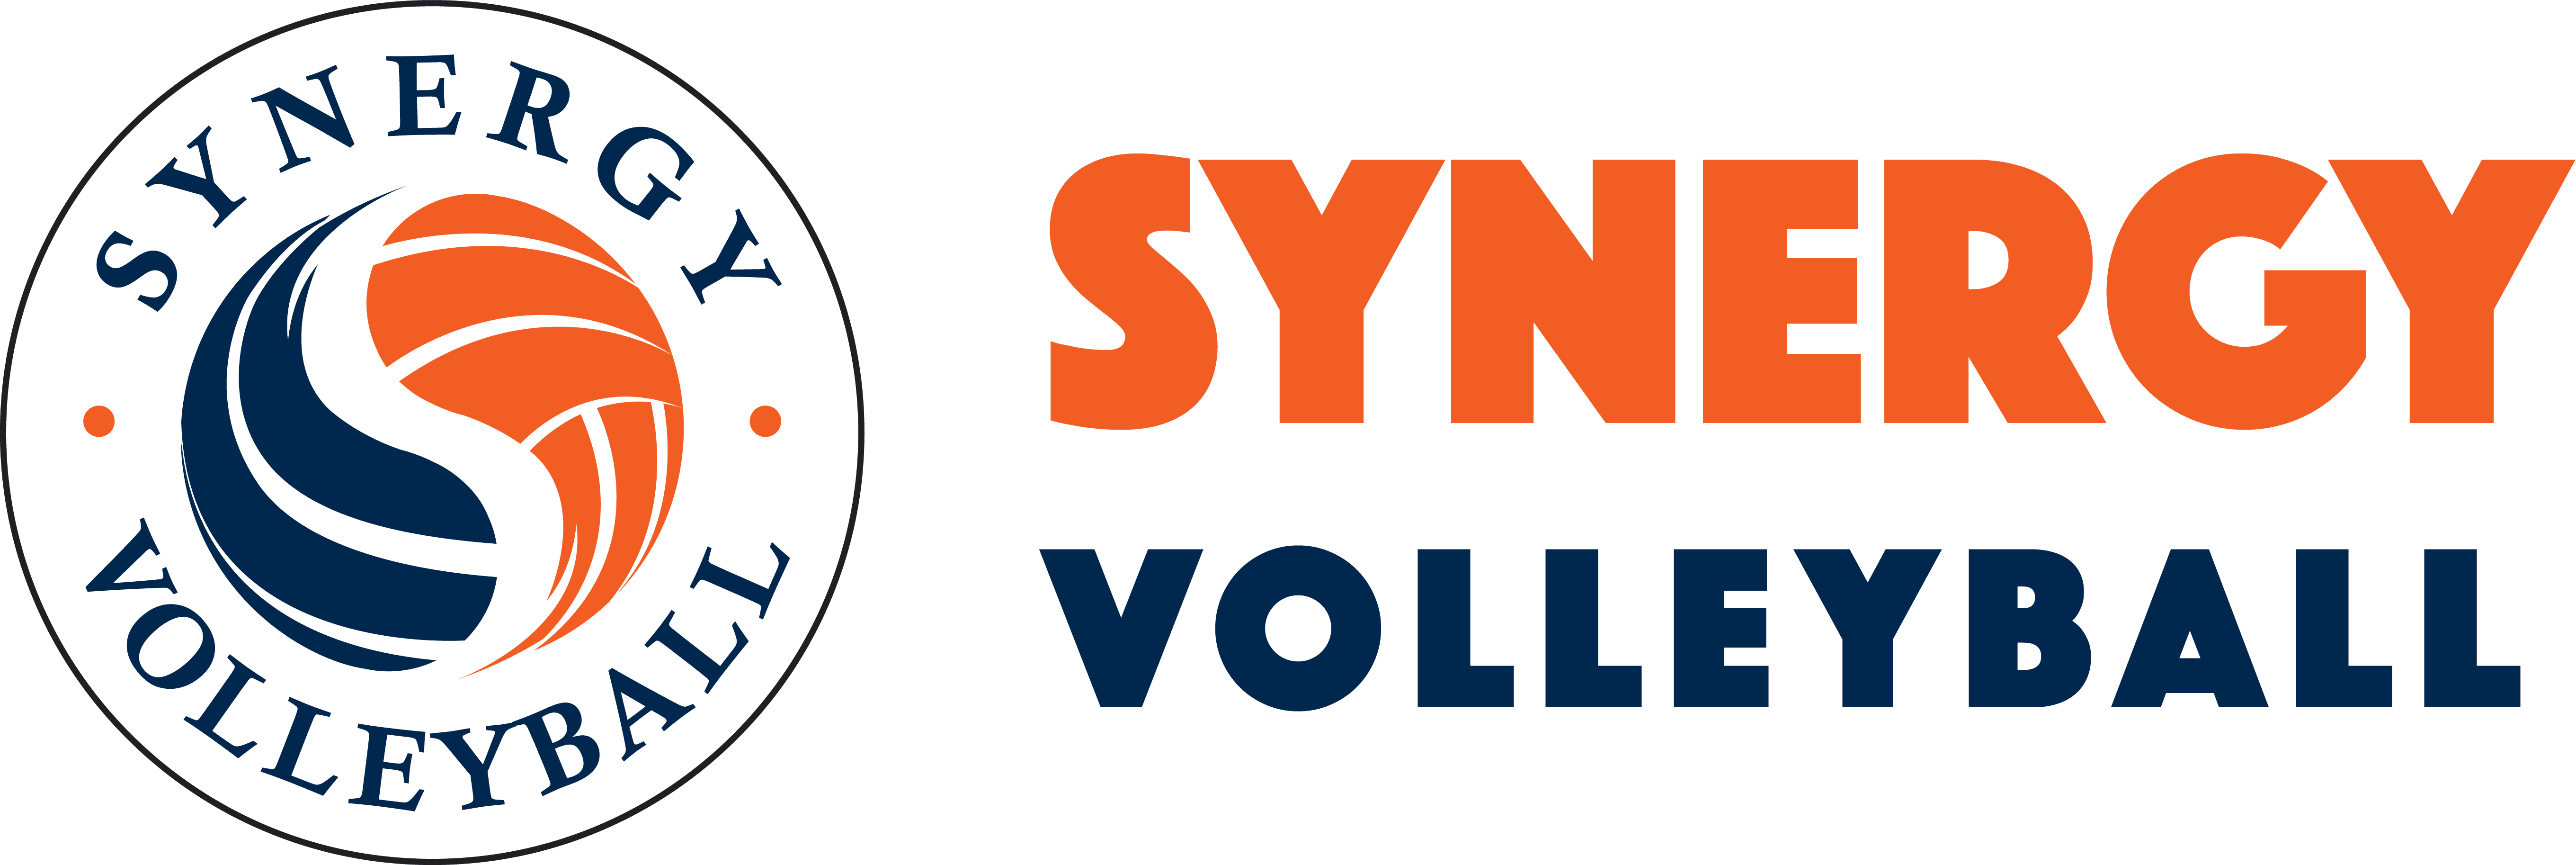 synergyvolleyball logo